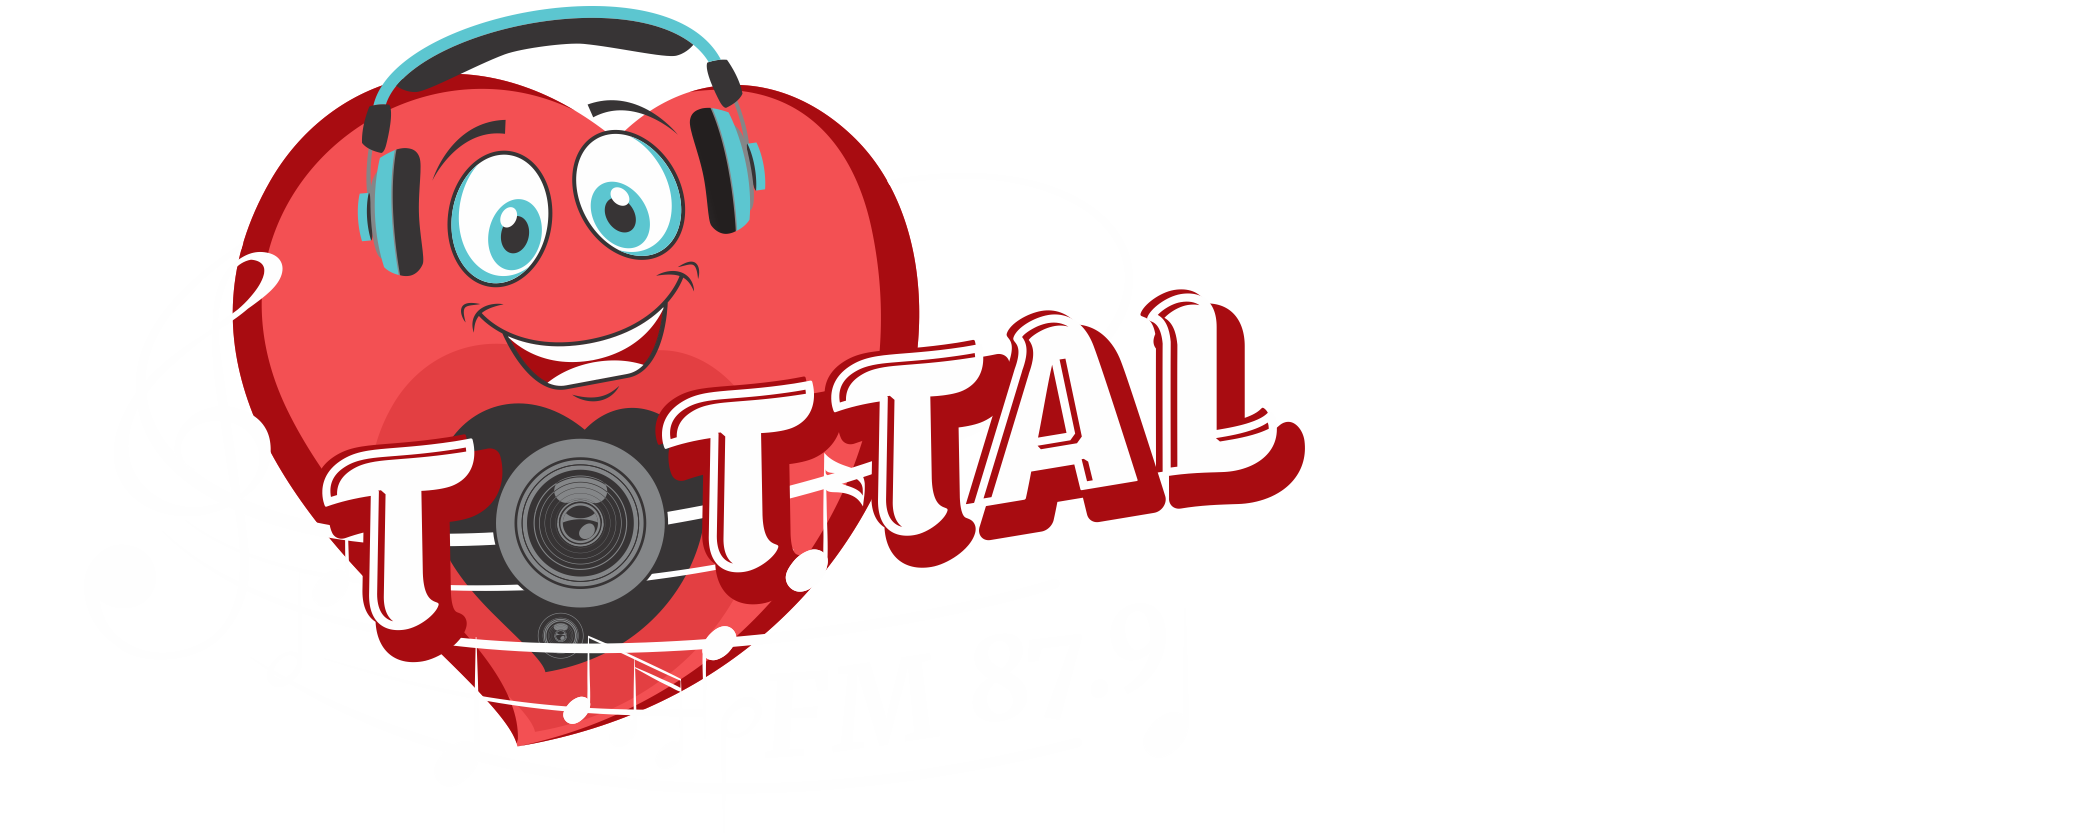  Tottal FM 87,9 Mhz